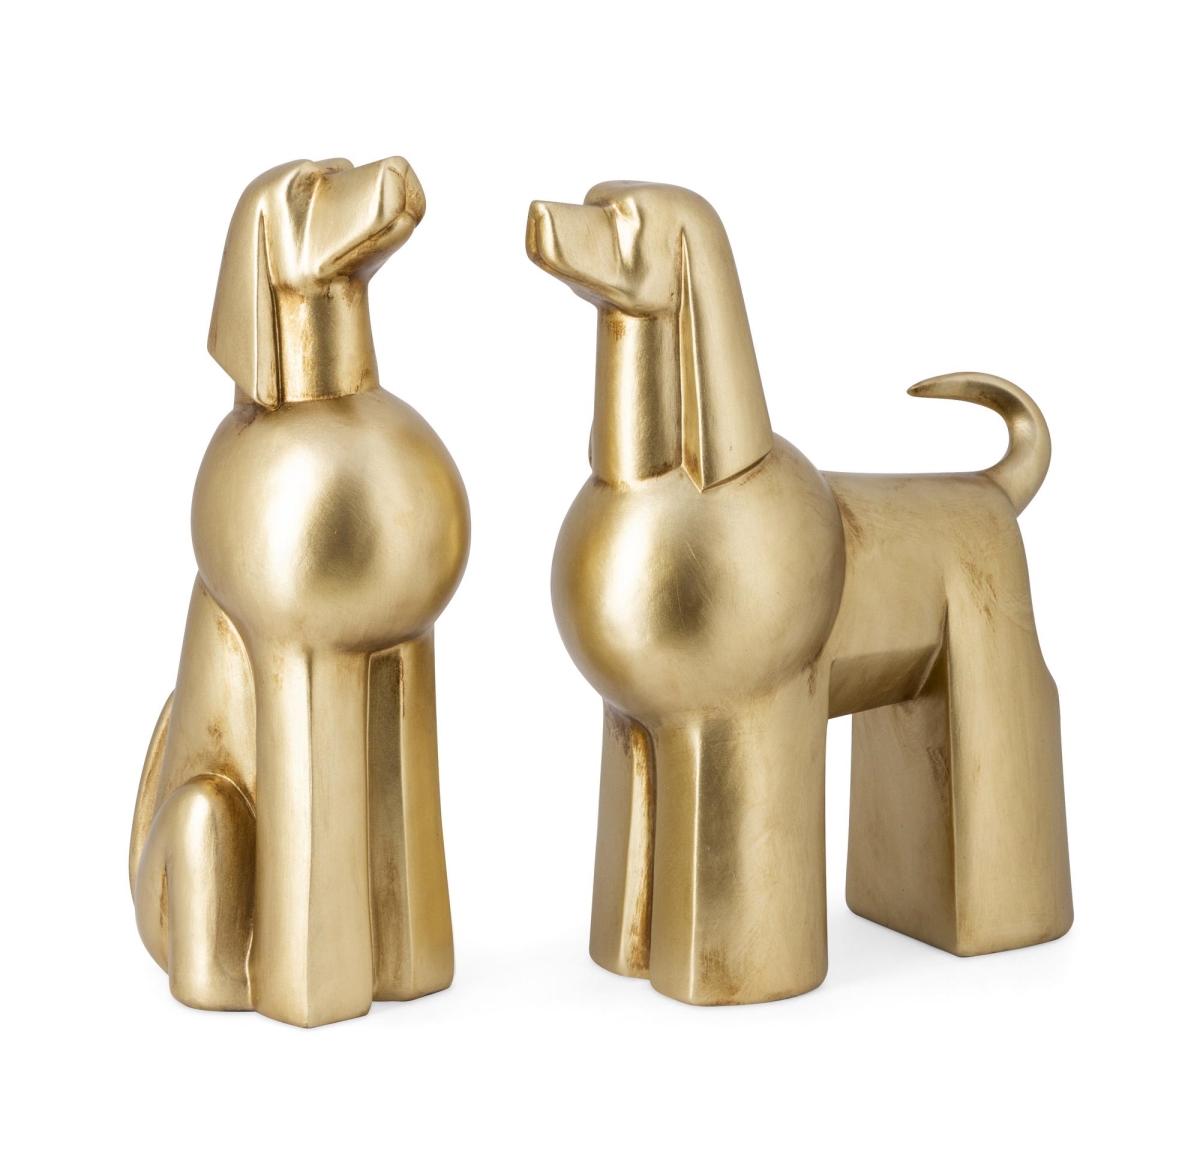 Imax 23405-2 Surrey Gold Dog Statuaries - Set Of 2